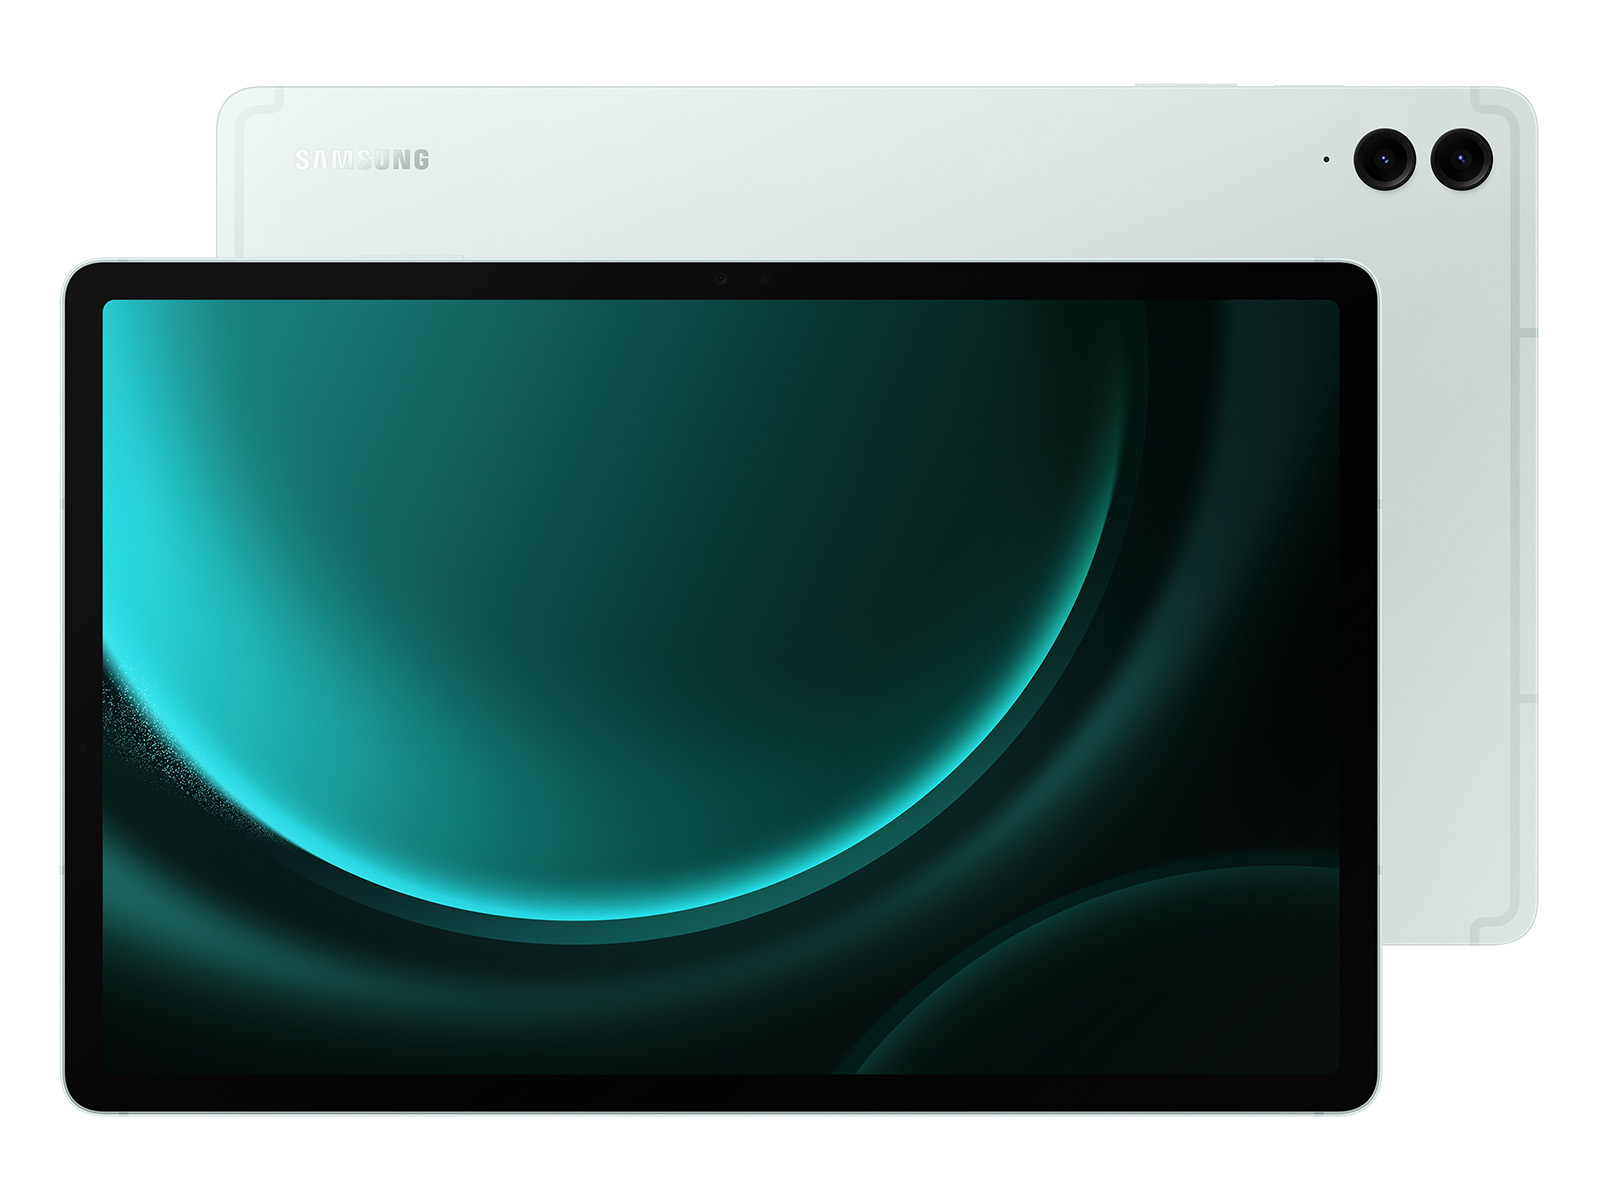 SamsungUS/home/mobile/tablets/all-tablets/092923/s9-fe-plus/mint/1.jpg